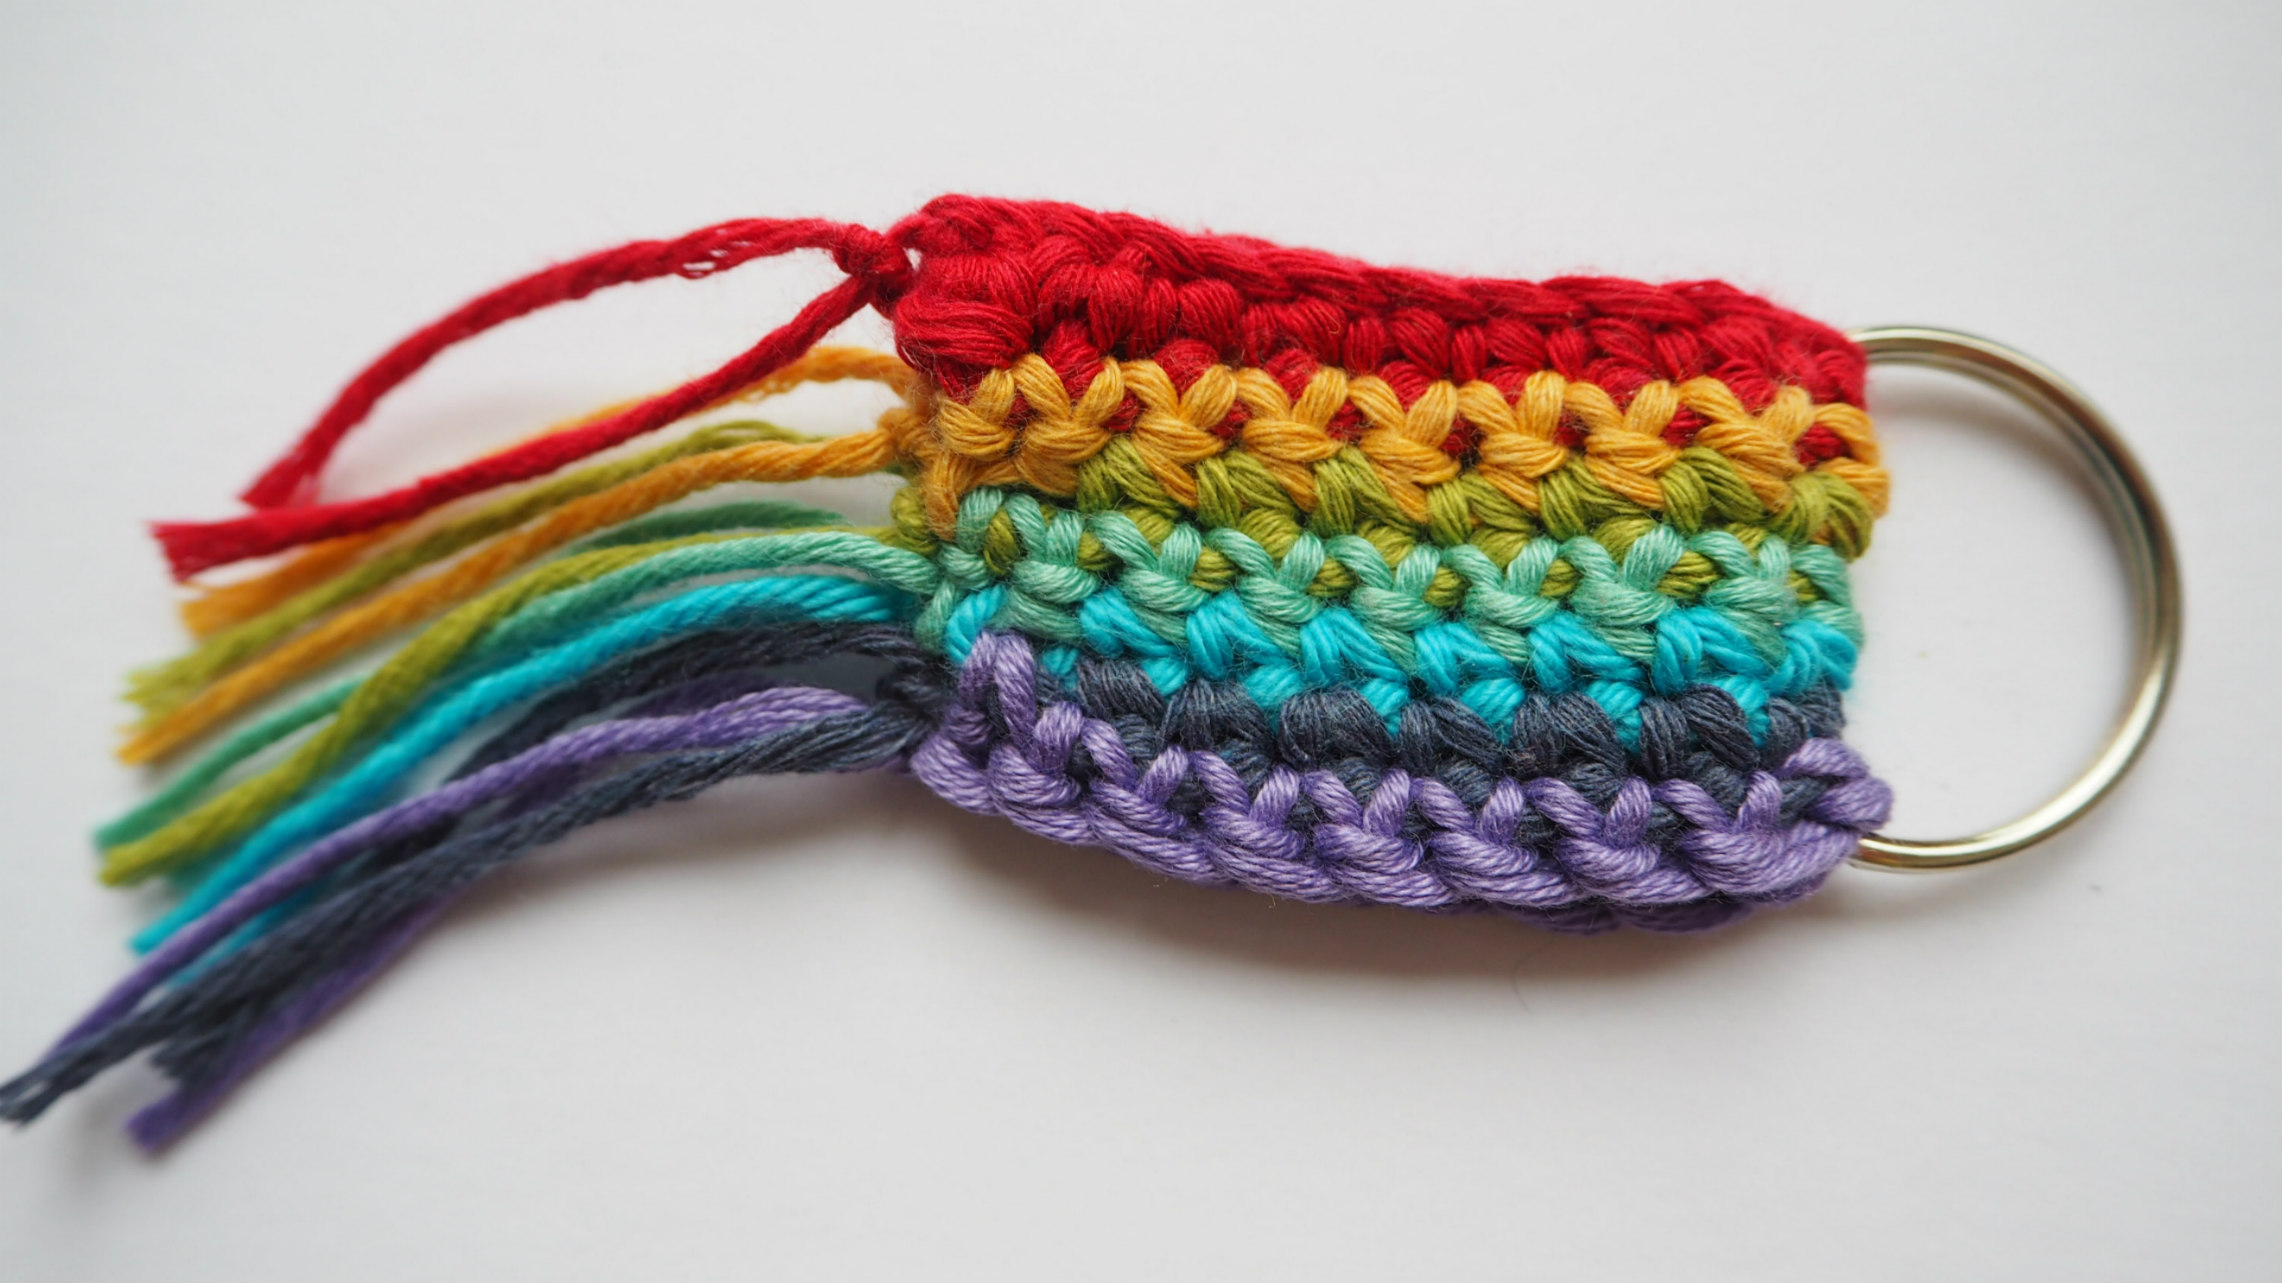 Crochet key ring